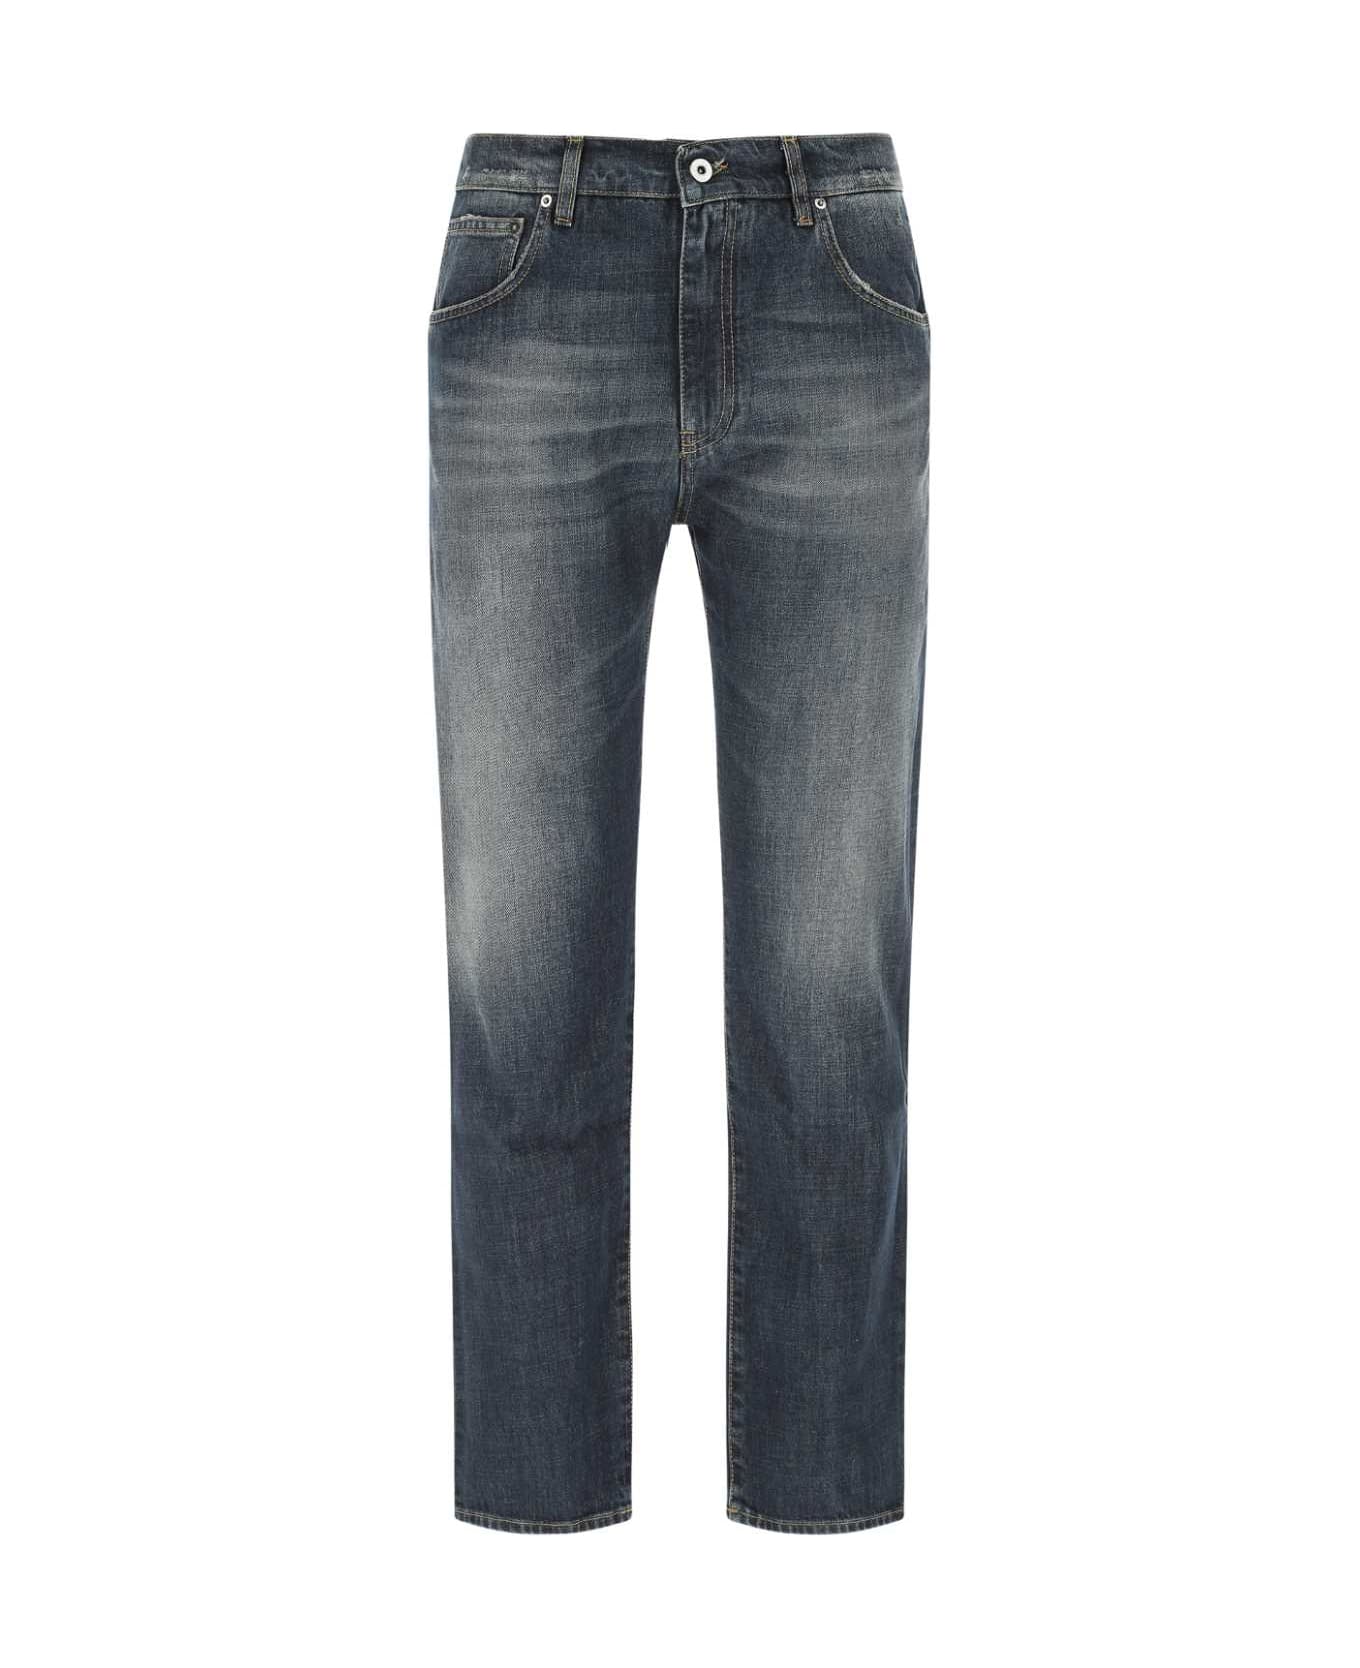 14 Bros Denim Cheswick Jeans - 9149 デニム